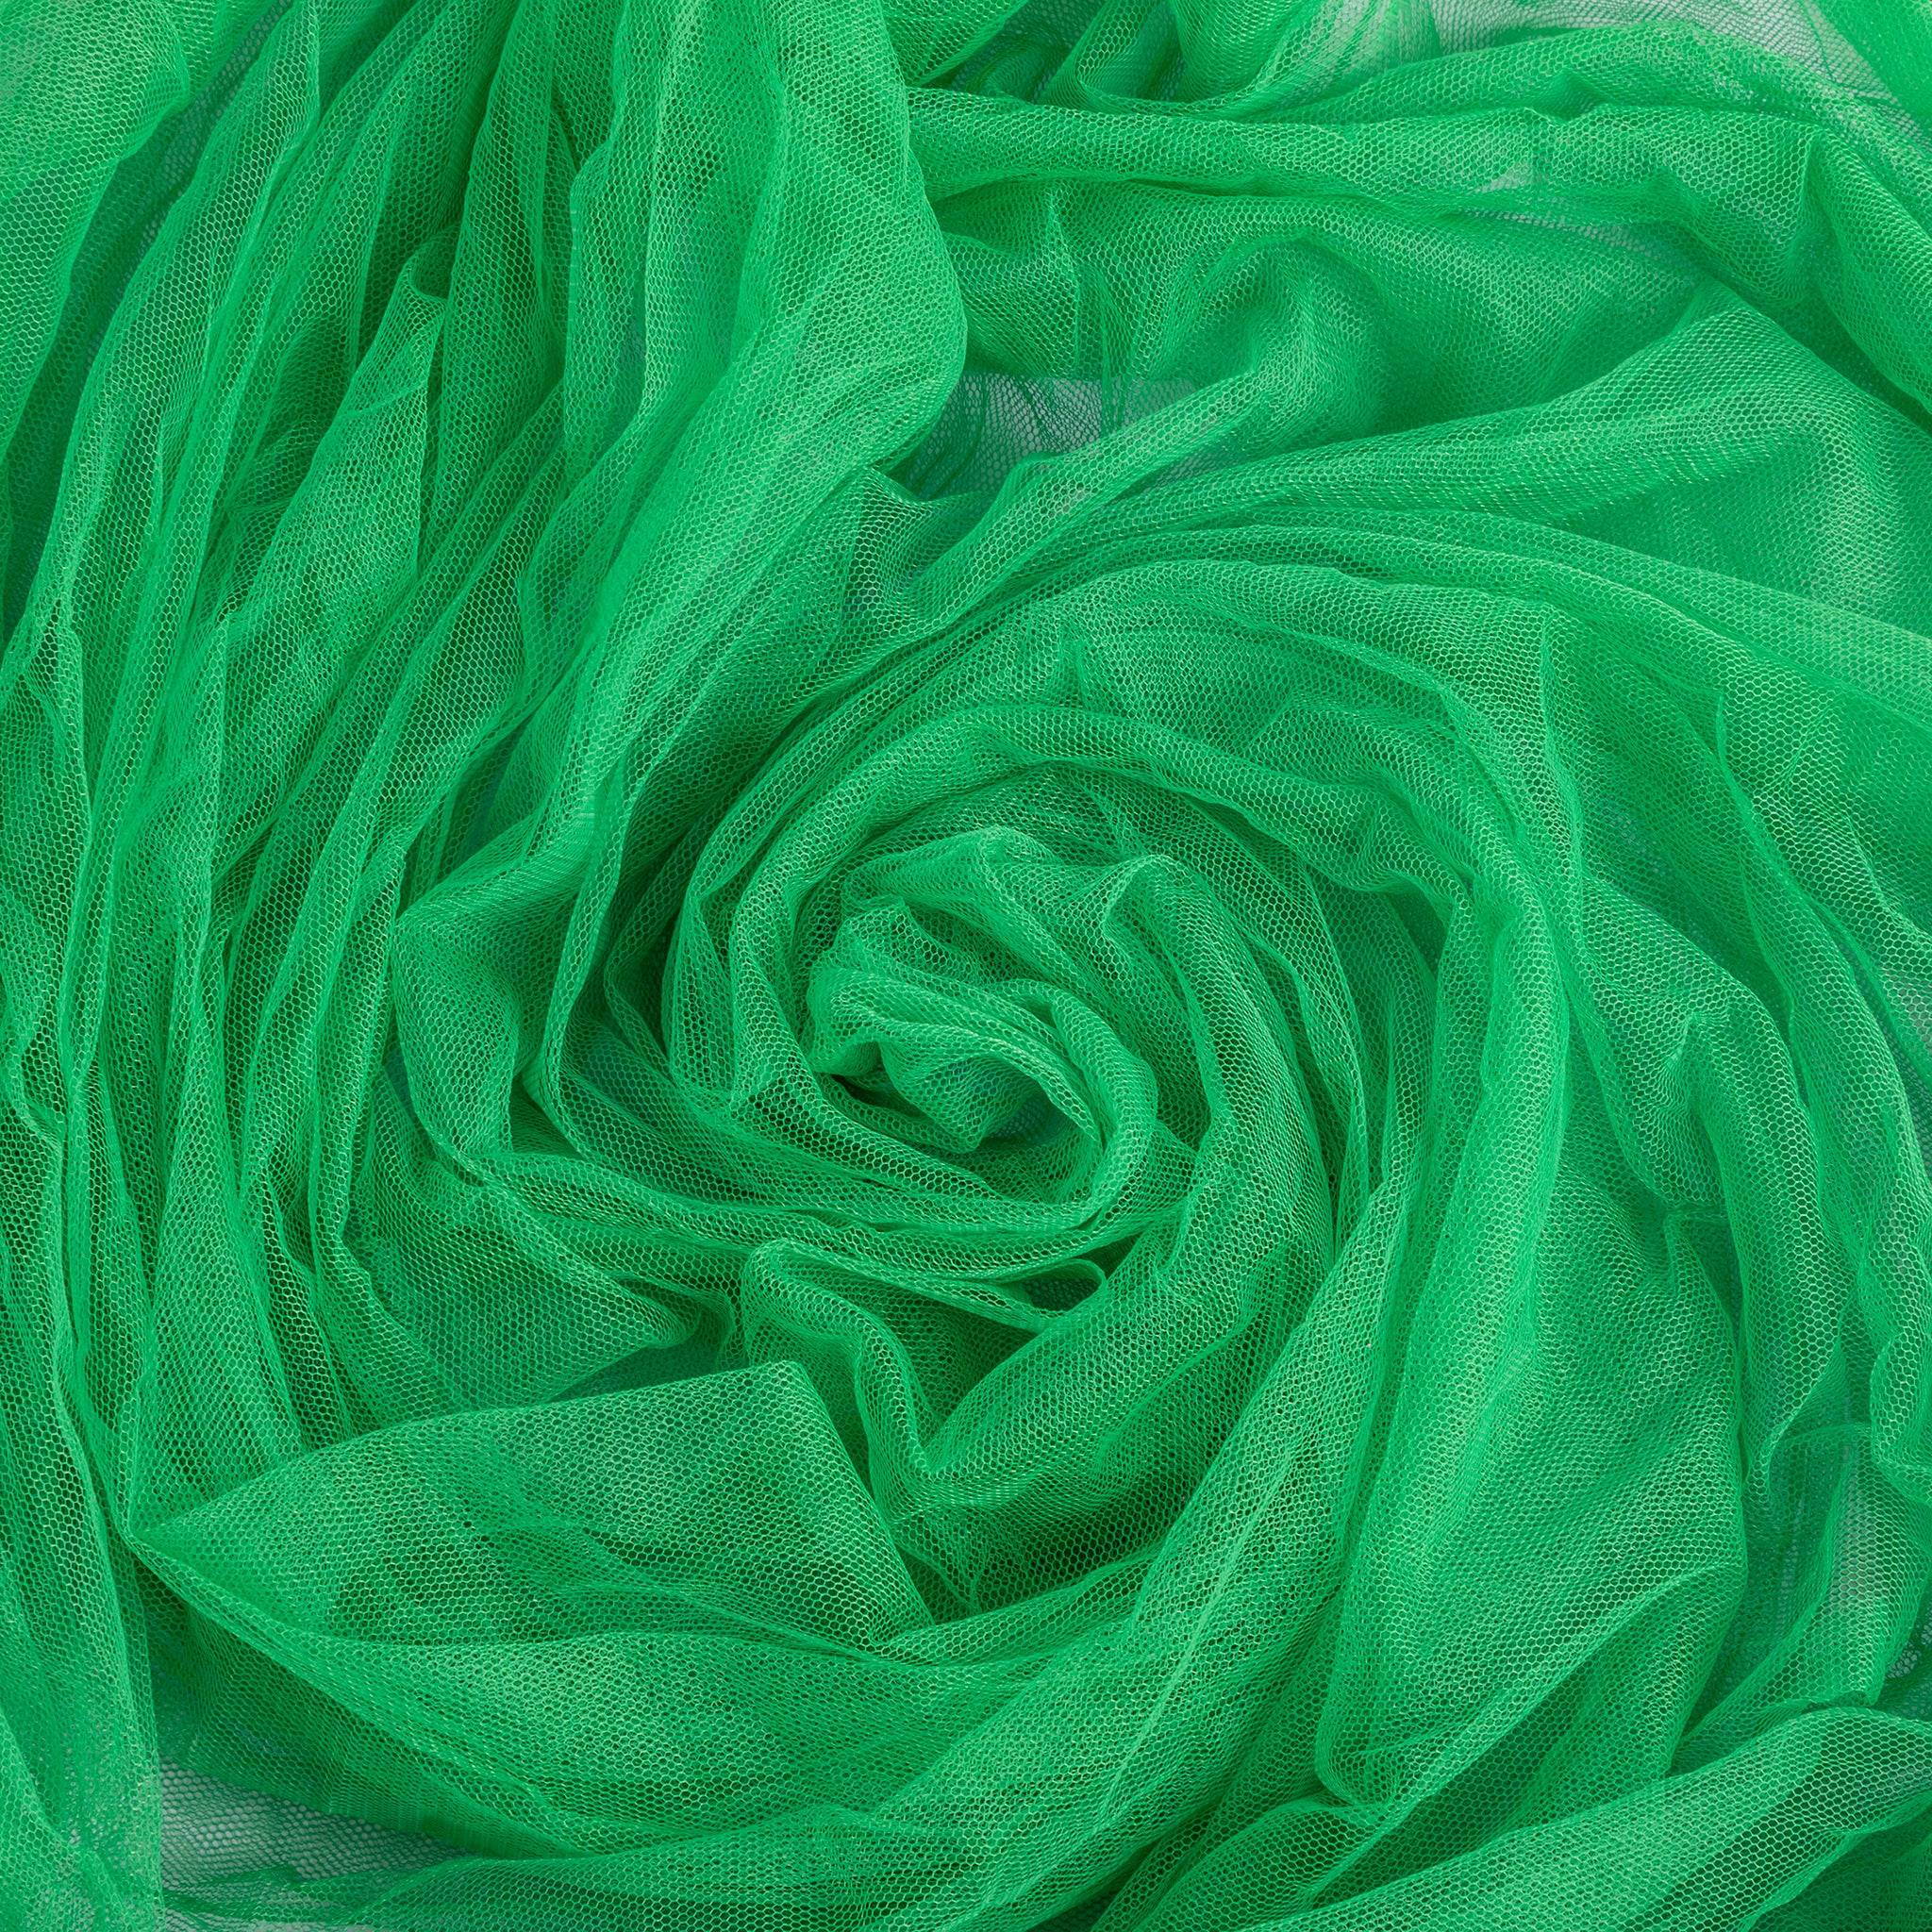 CV Linens Soft Tulle Fabric Roll 54 x 40 yds - Kelly Green